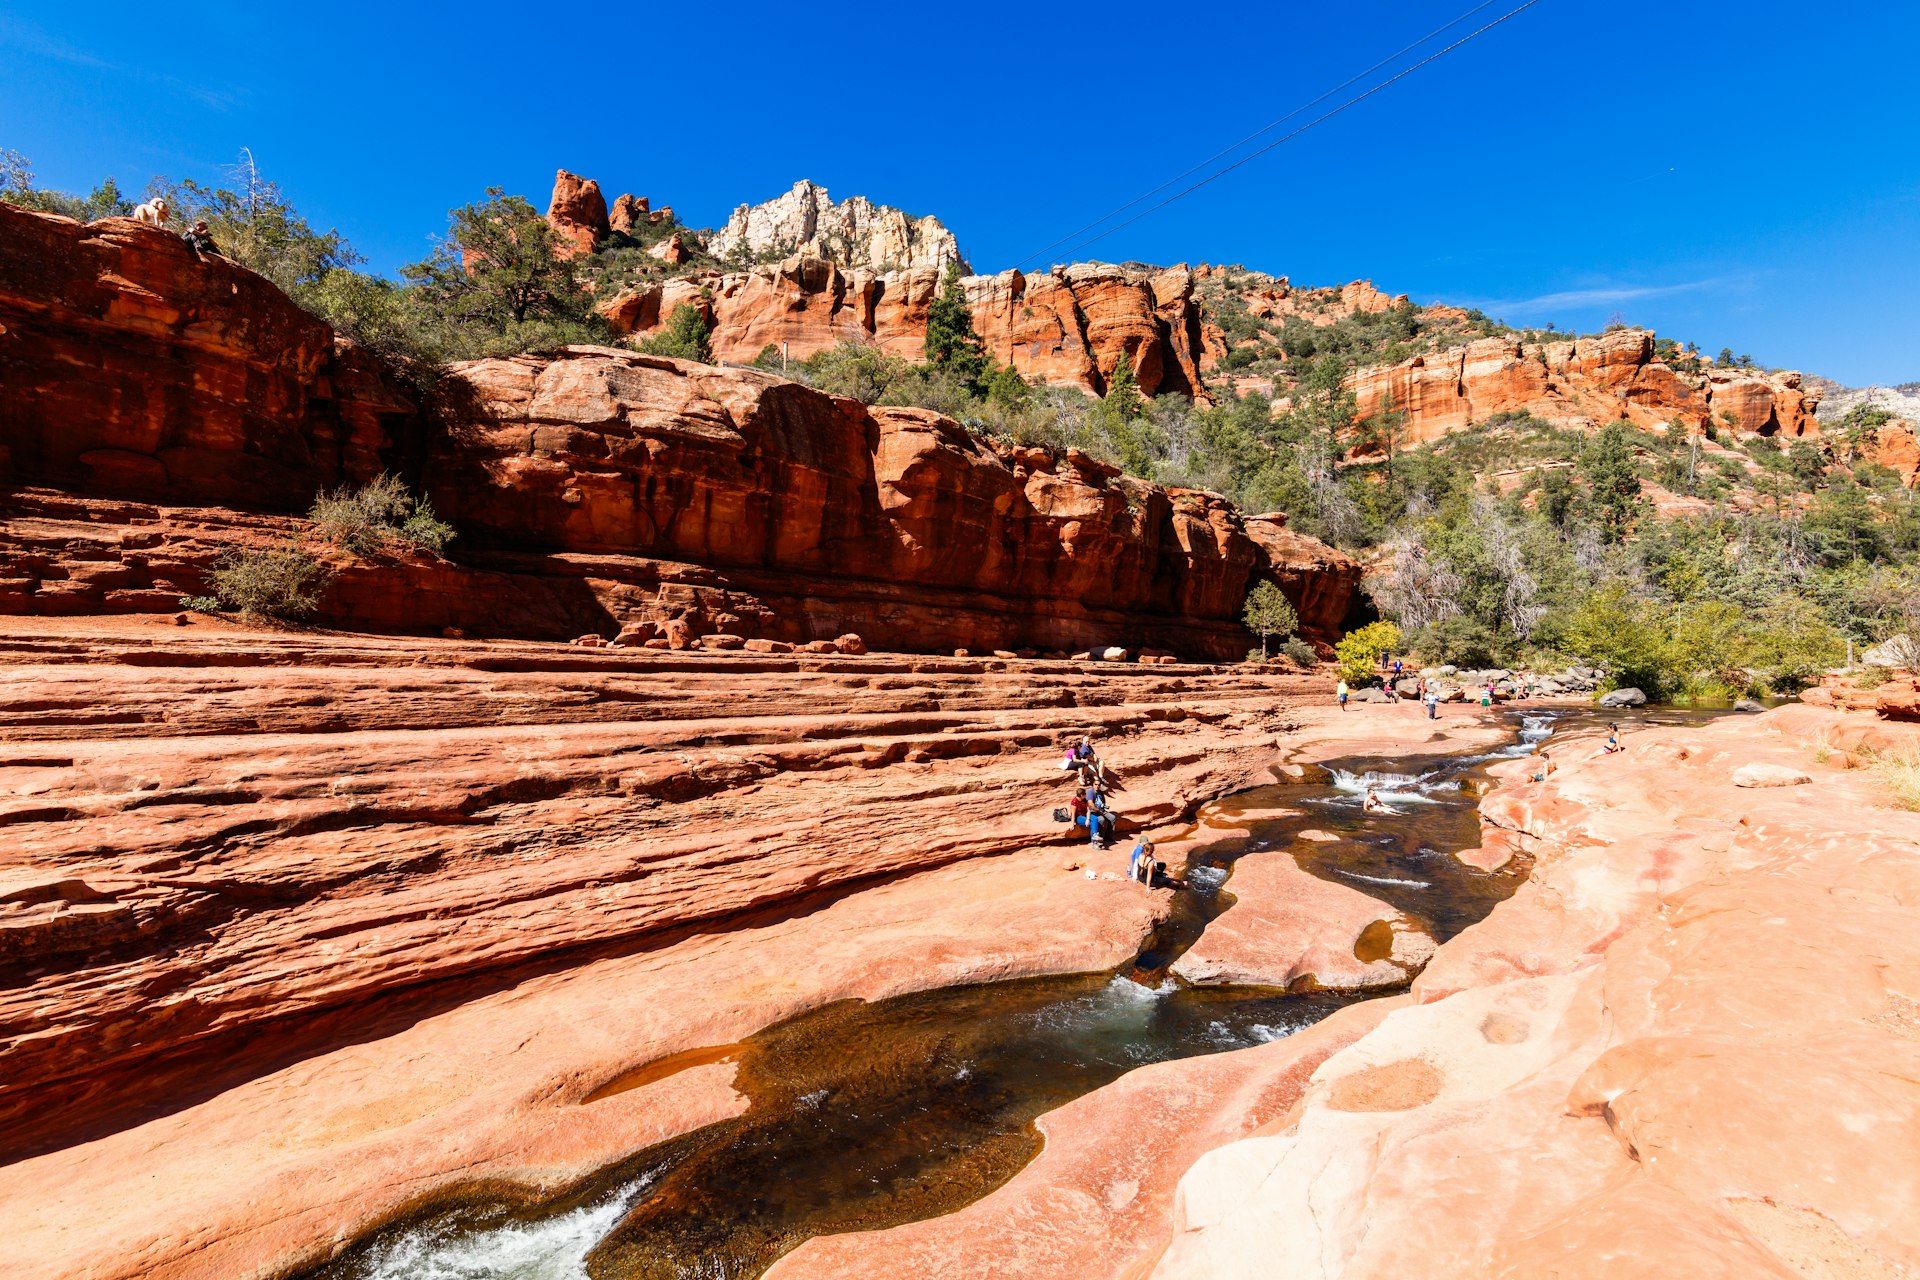 Visitors enjoying a river running through red rock canyons